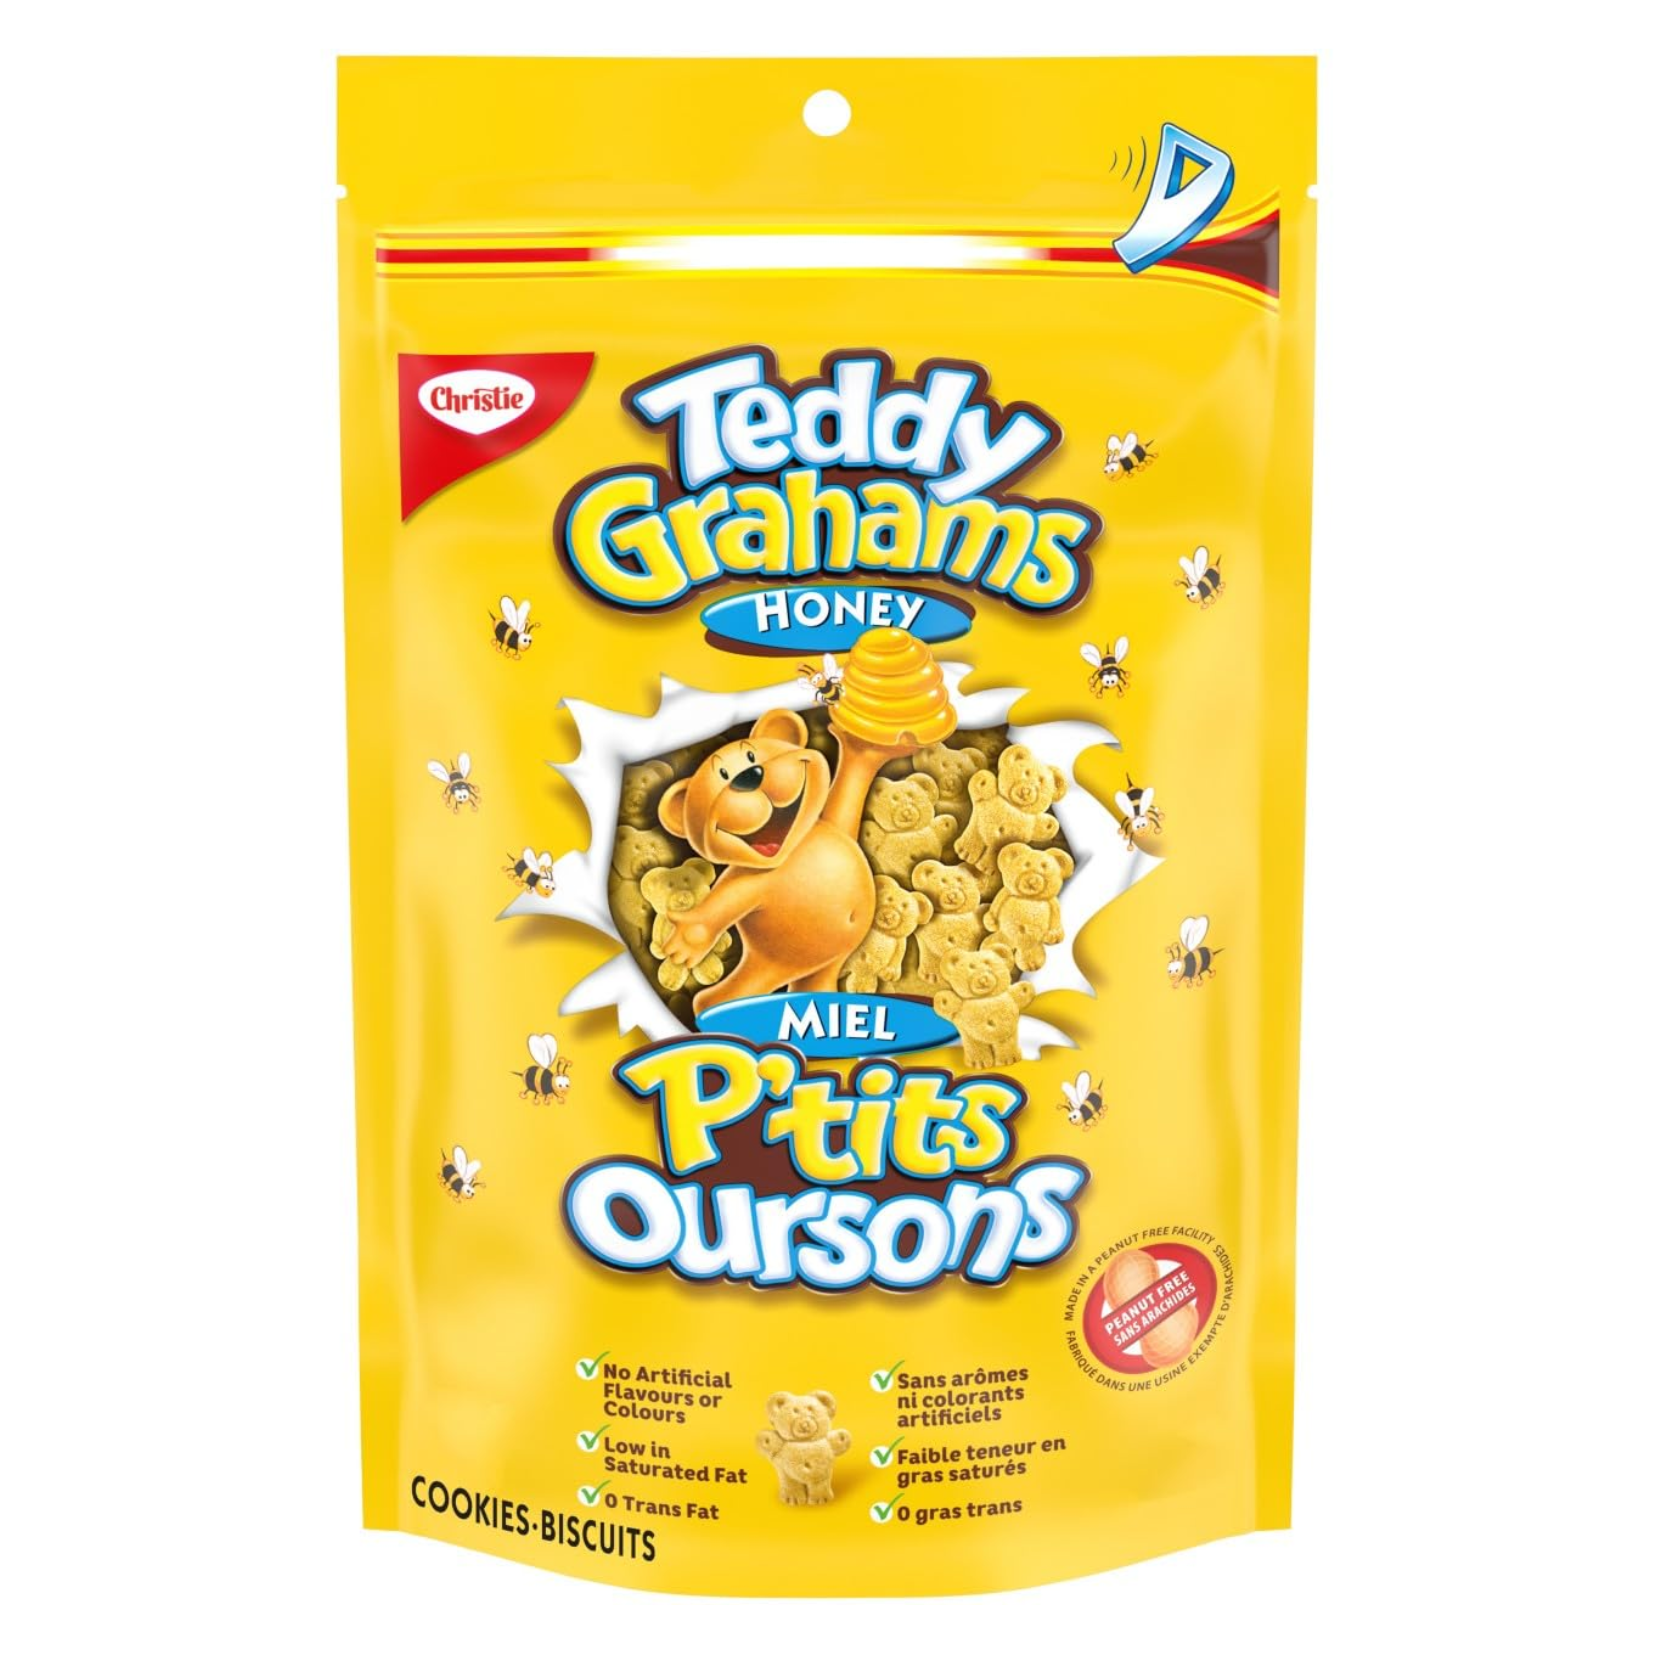 Christie Teddy Grahams  Honey Cookies 225g